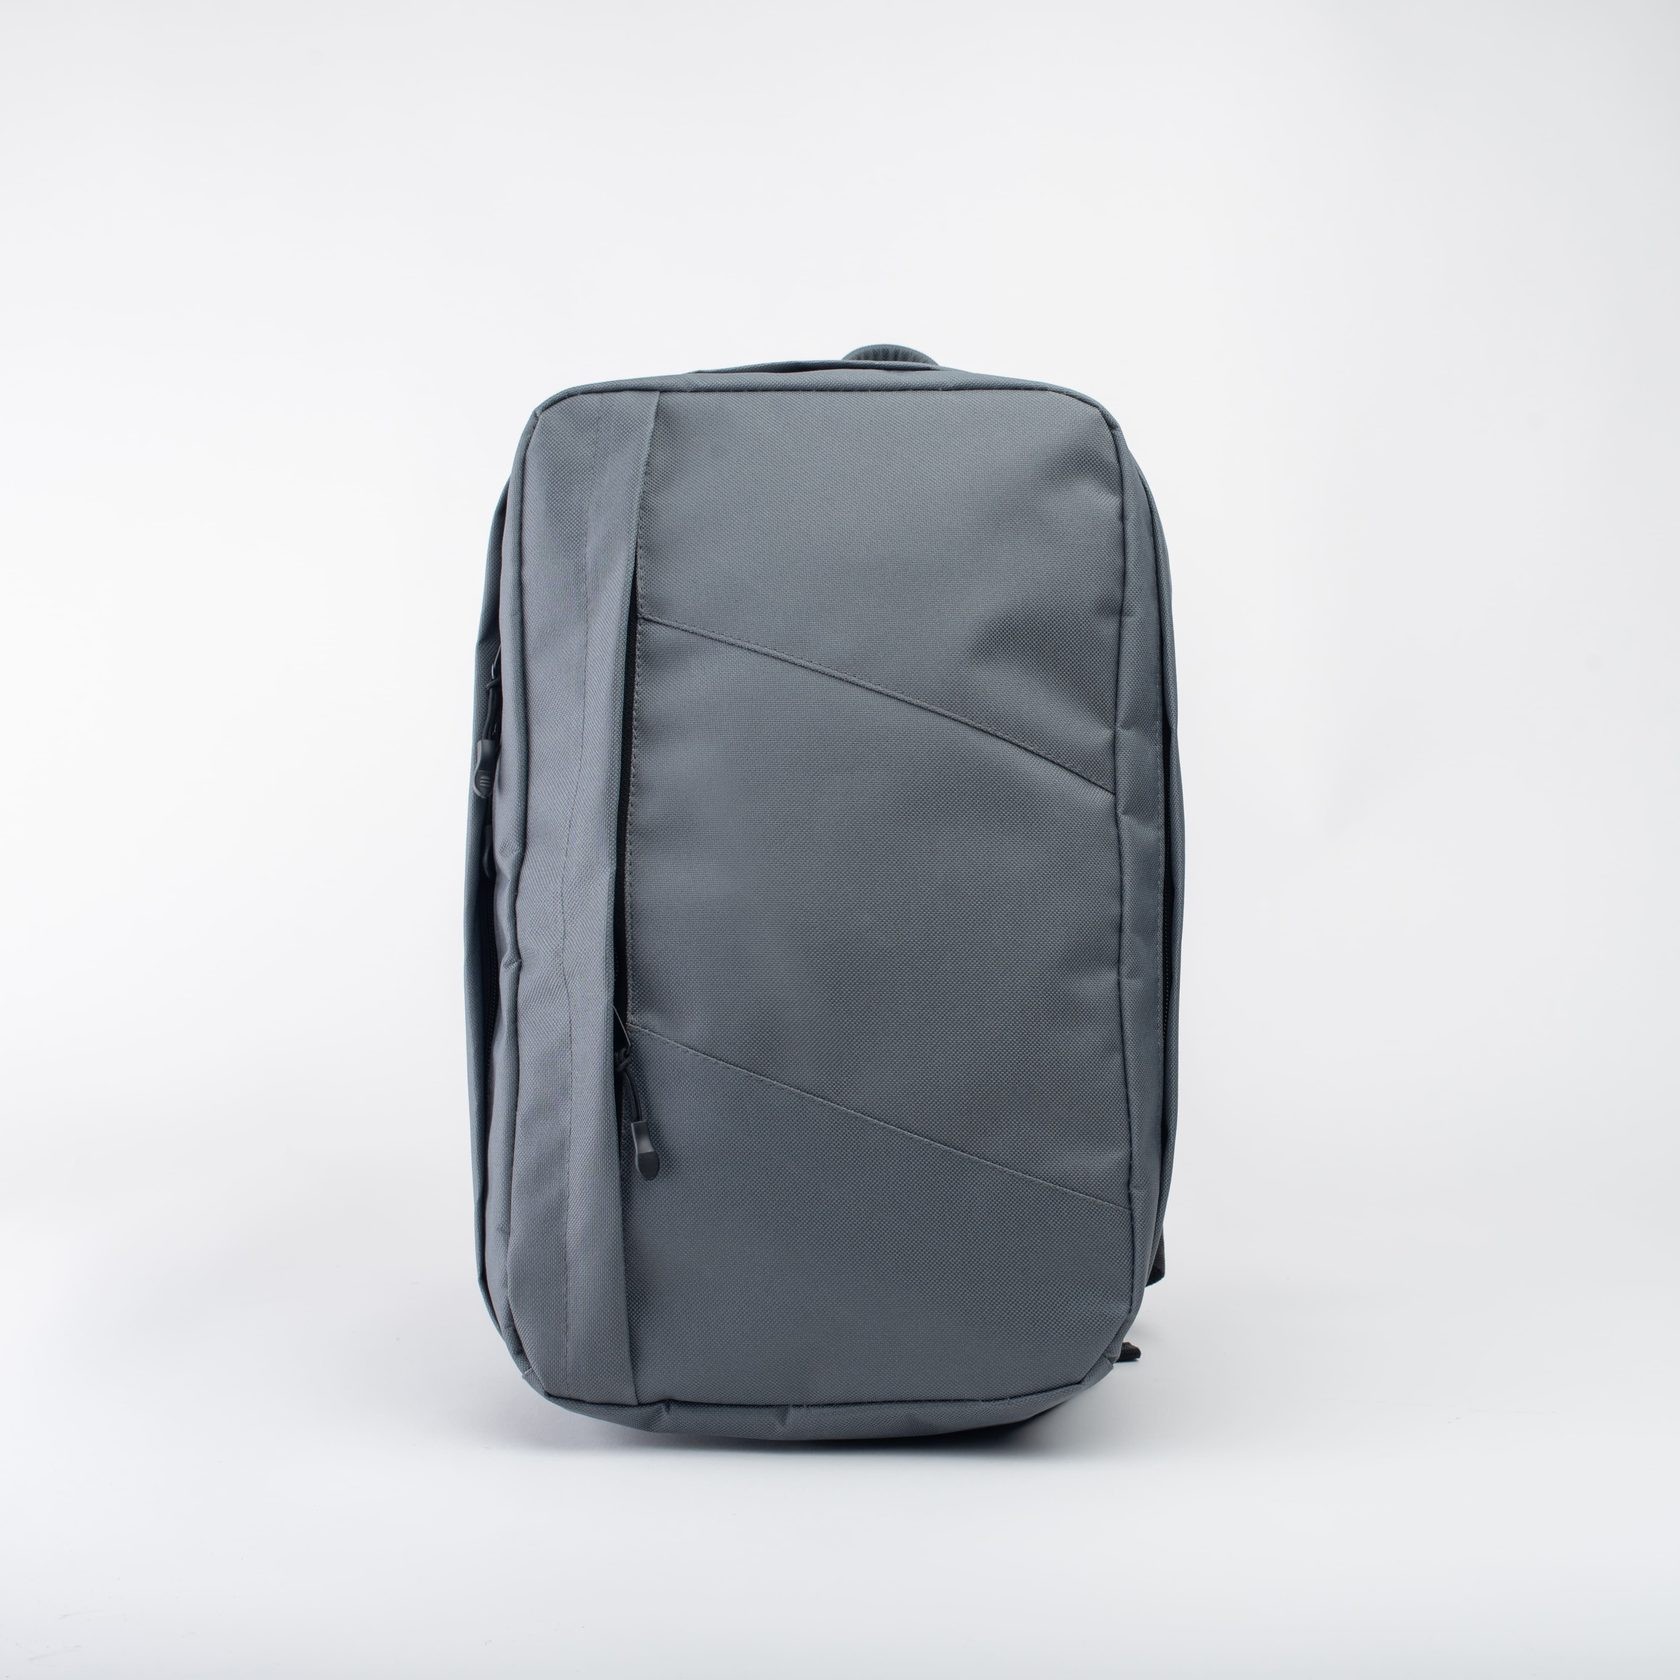 TRVLbag gray | hand luggage | backpack 40x20x25 cm